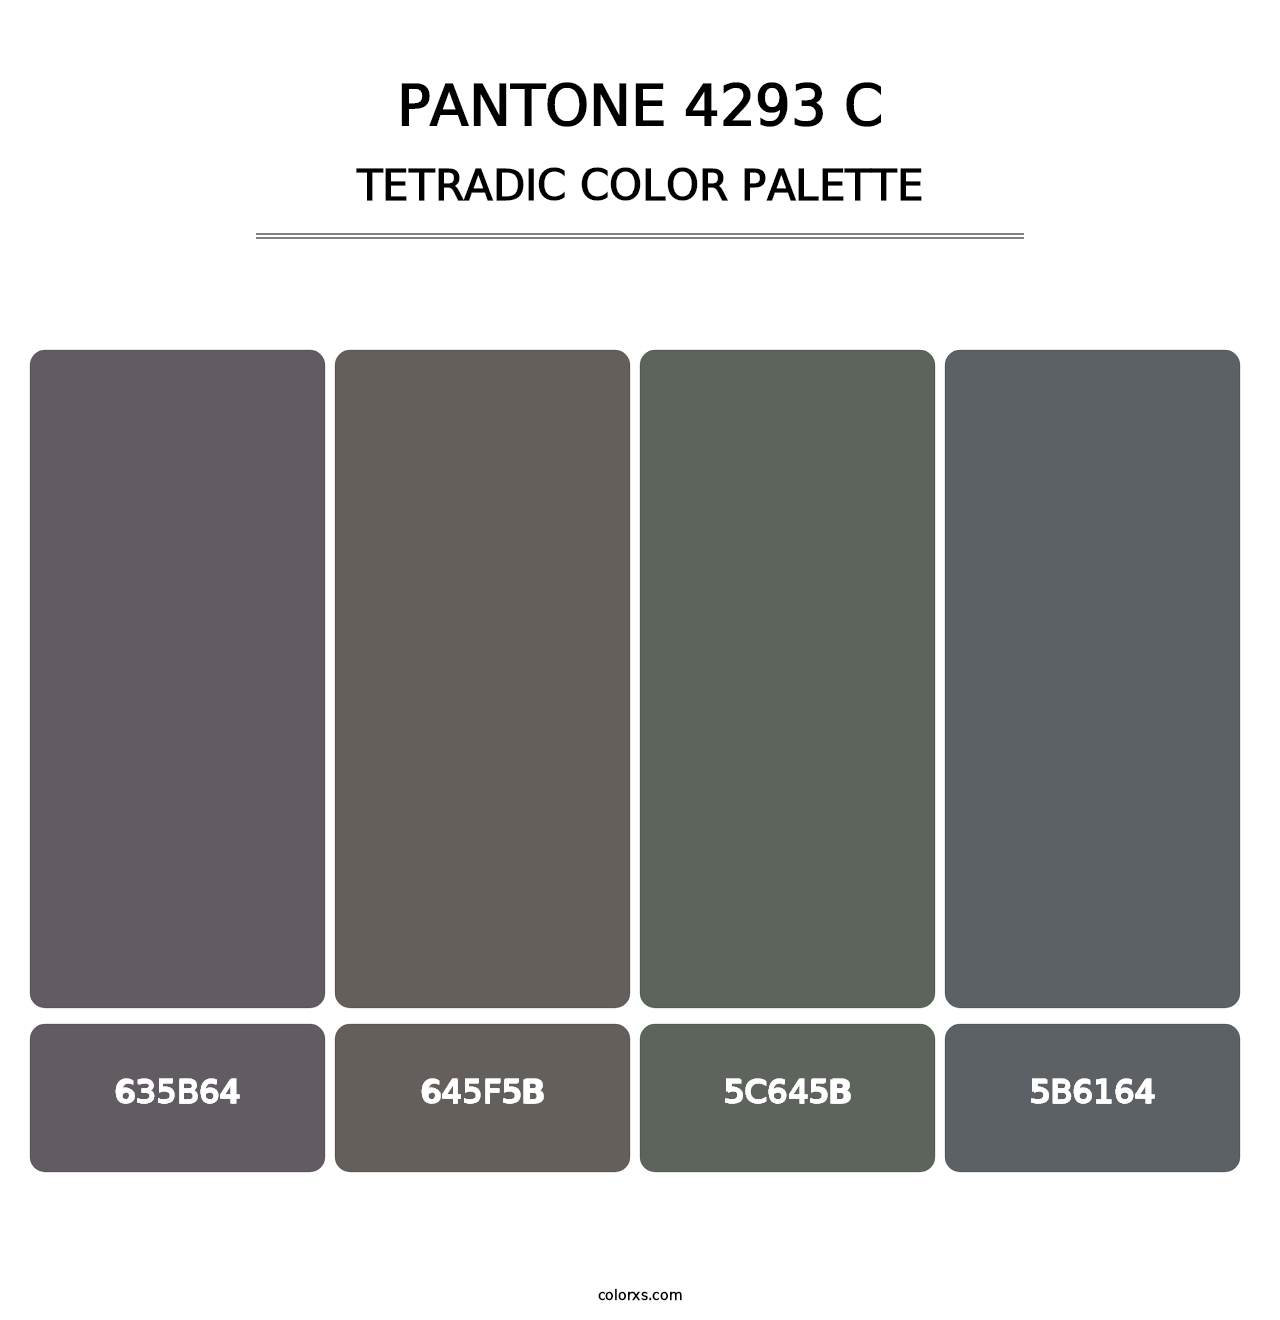 PANTONE 4293 C - Tetradic Color Palette